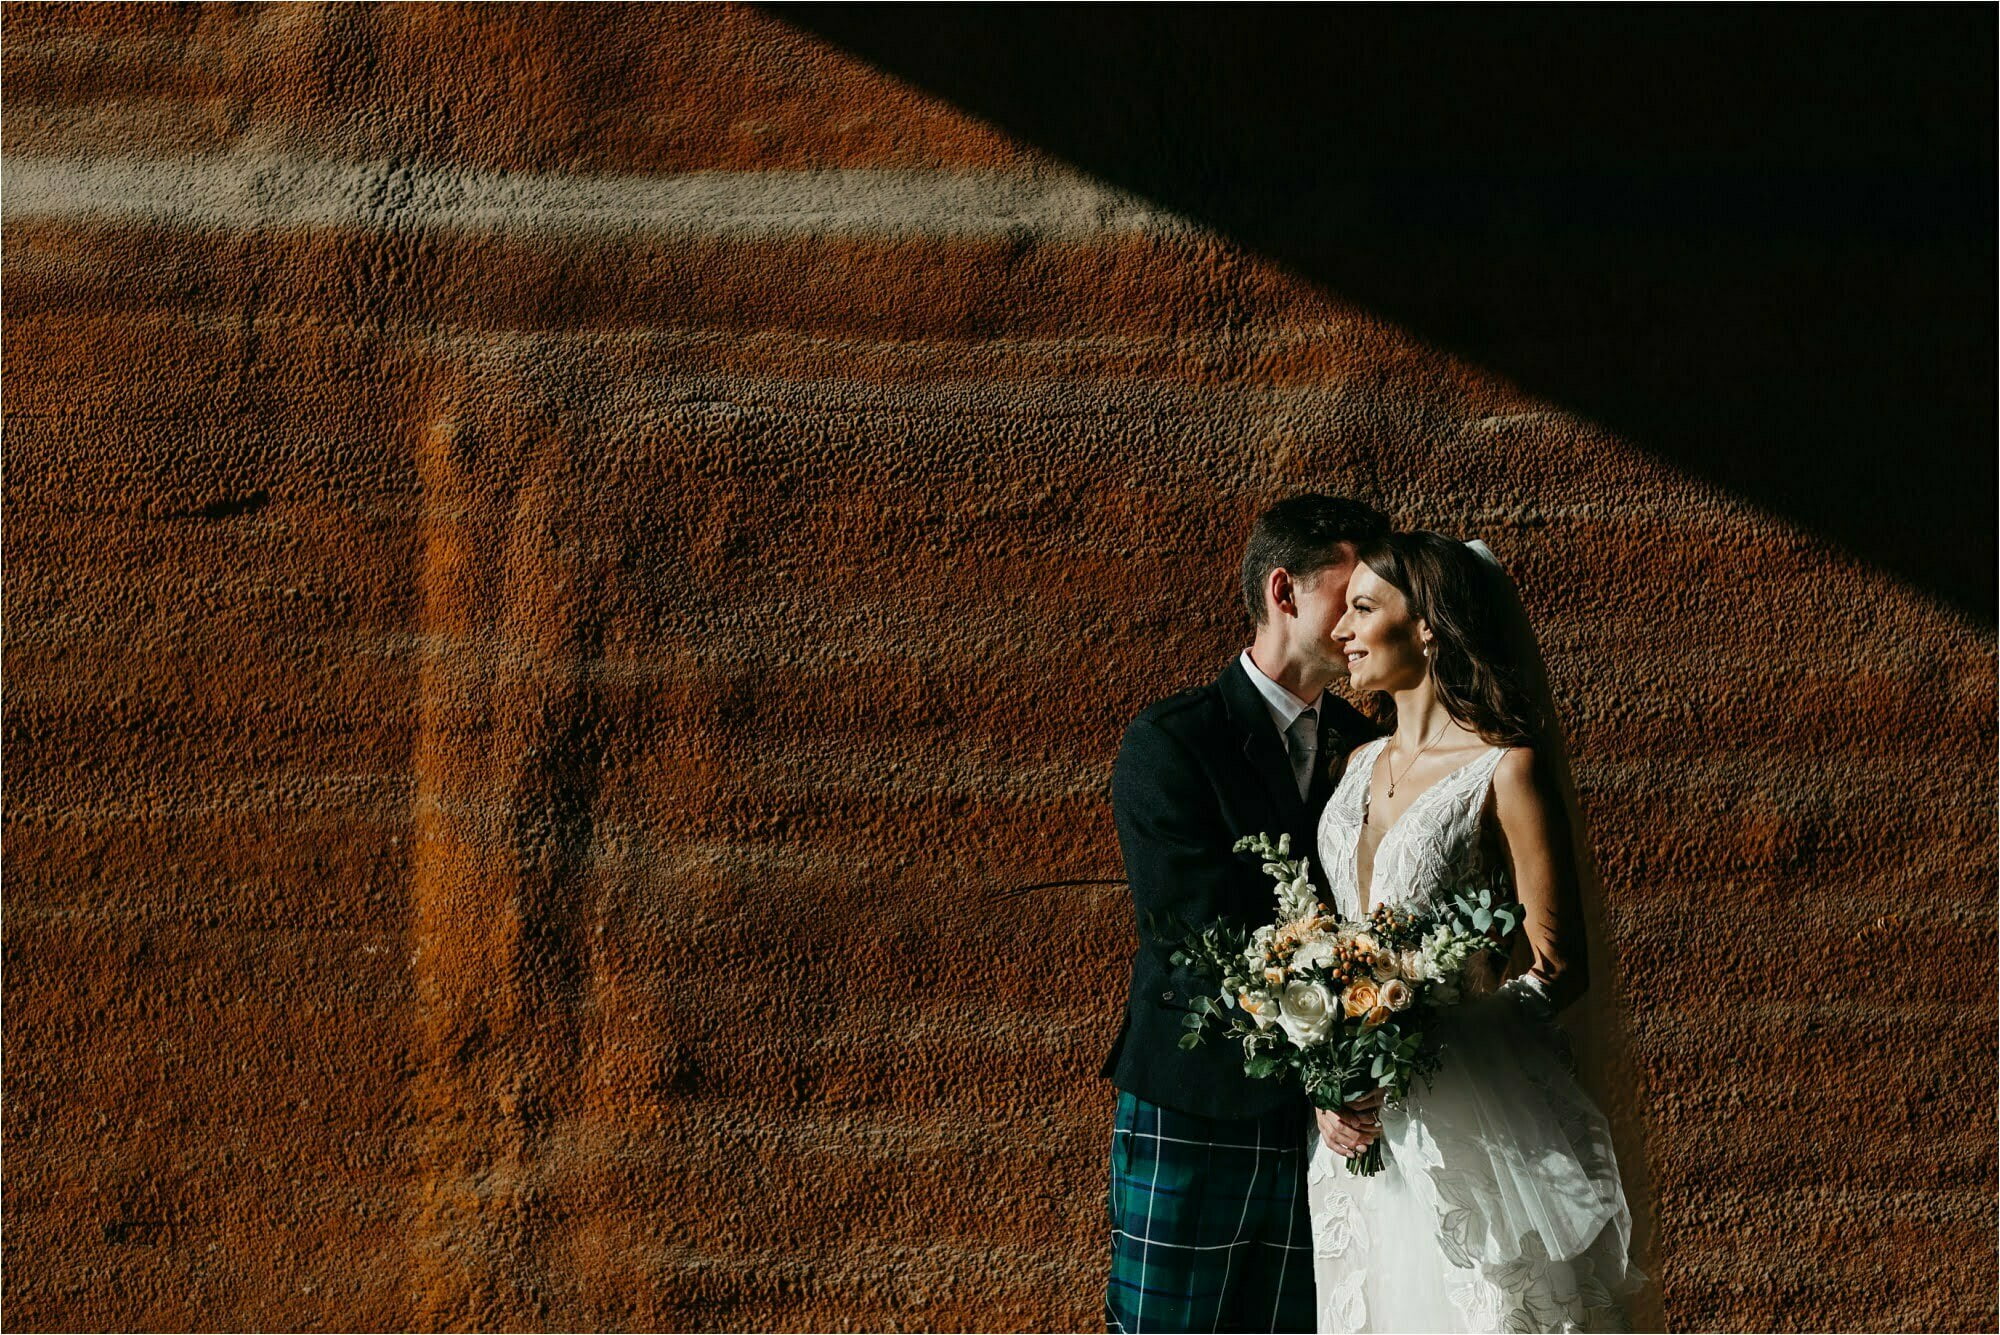 farm micro wedding scottish borders bride groom against red wall with shadows